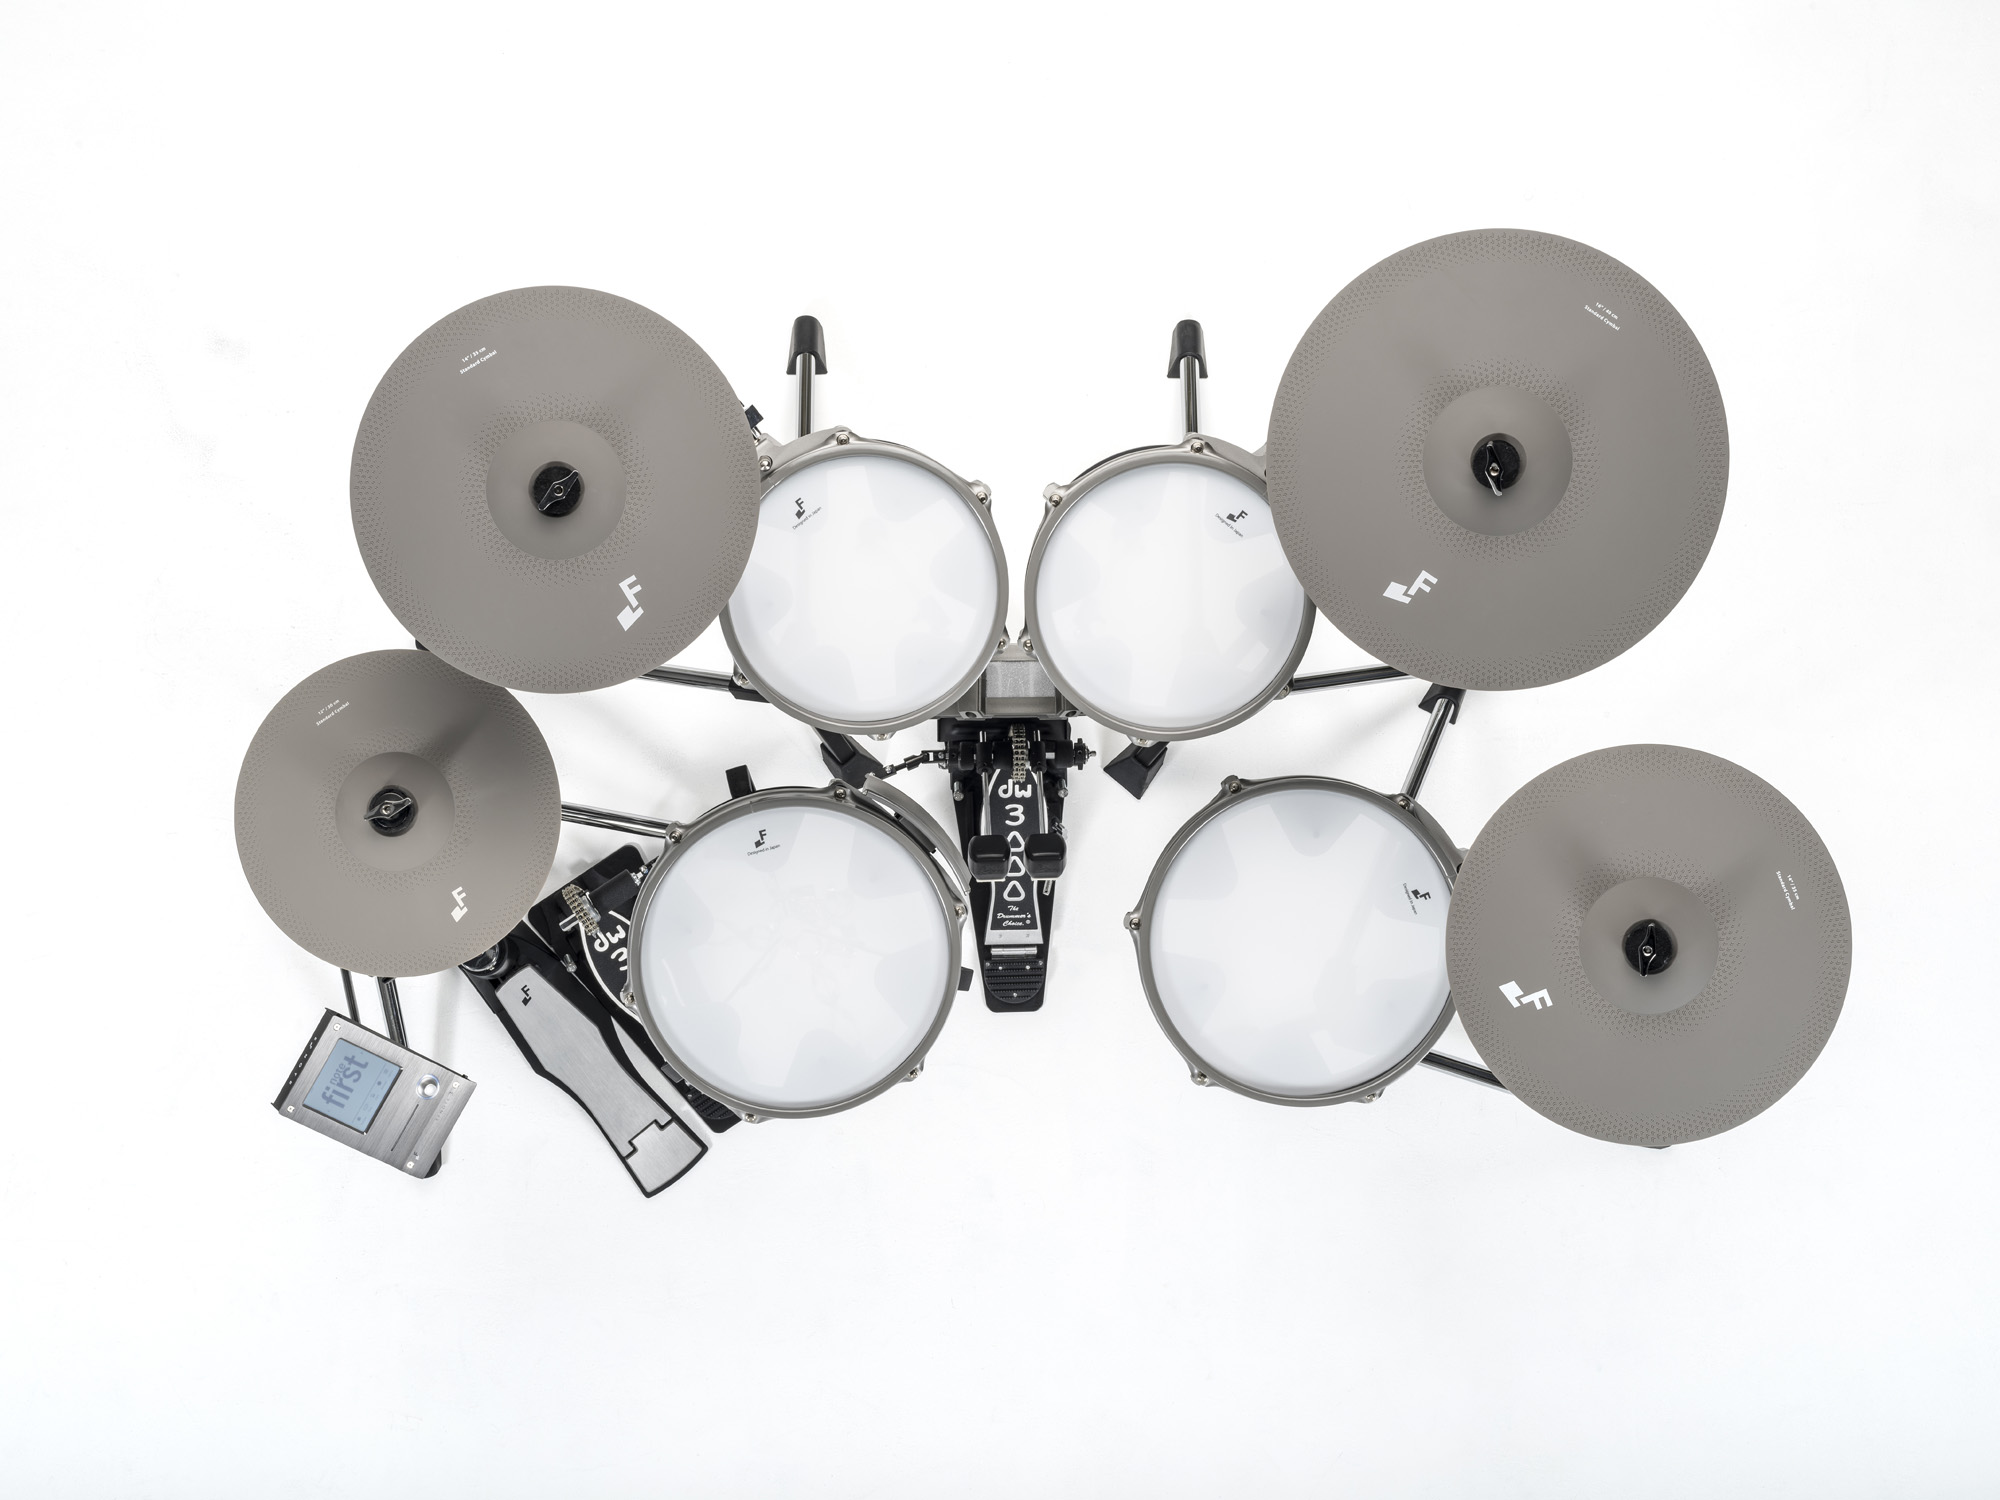 Efnote Efd3 Drum Kit - Elektronisch drumstel - Variation 3